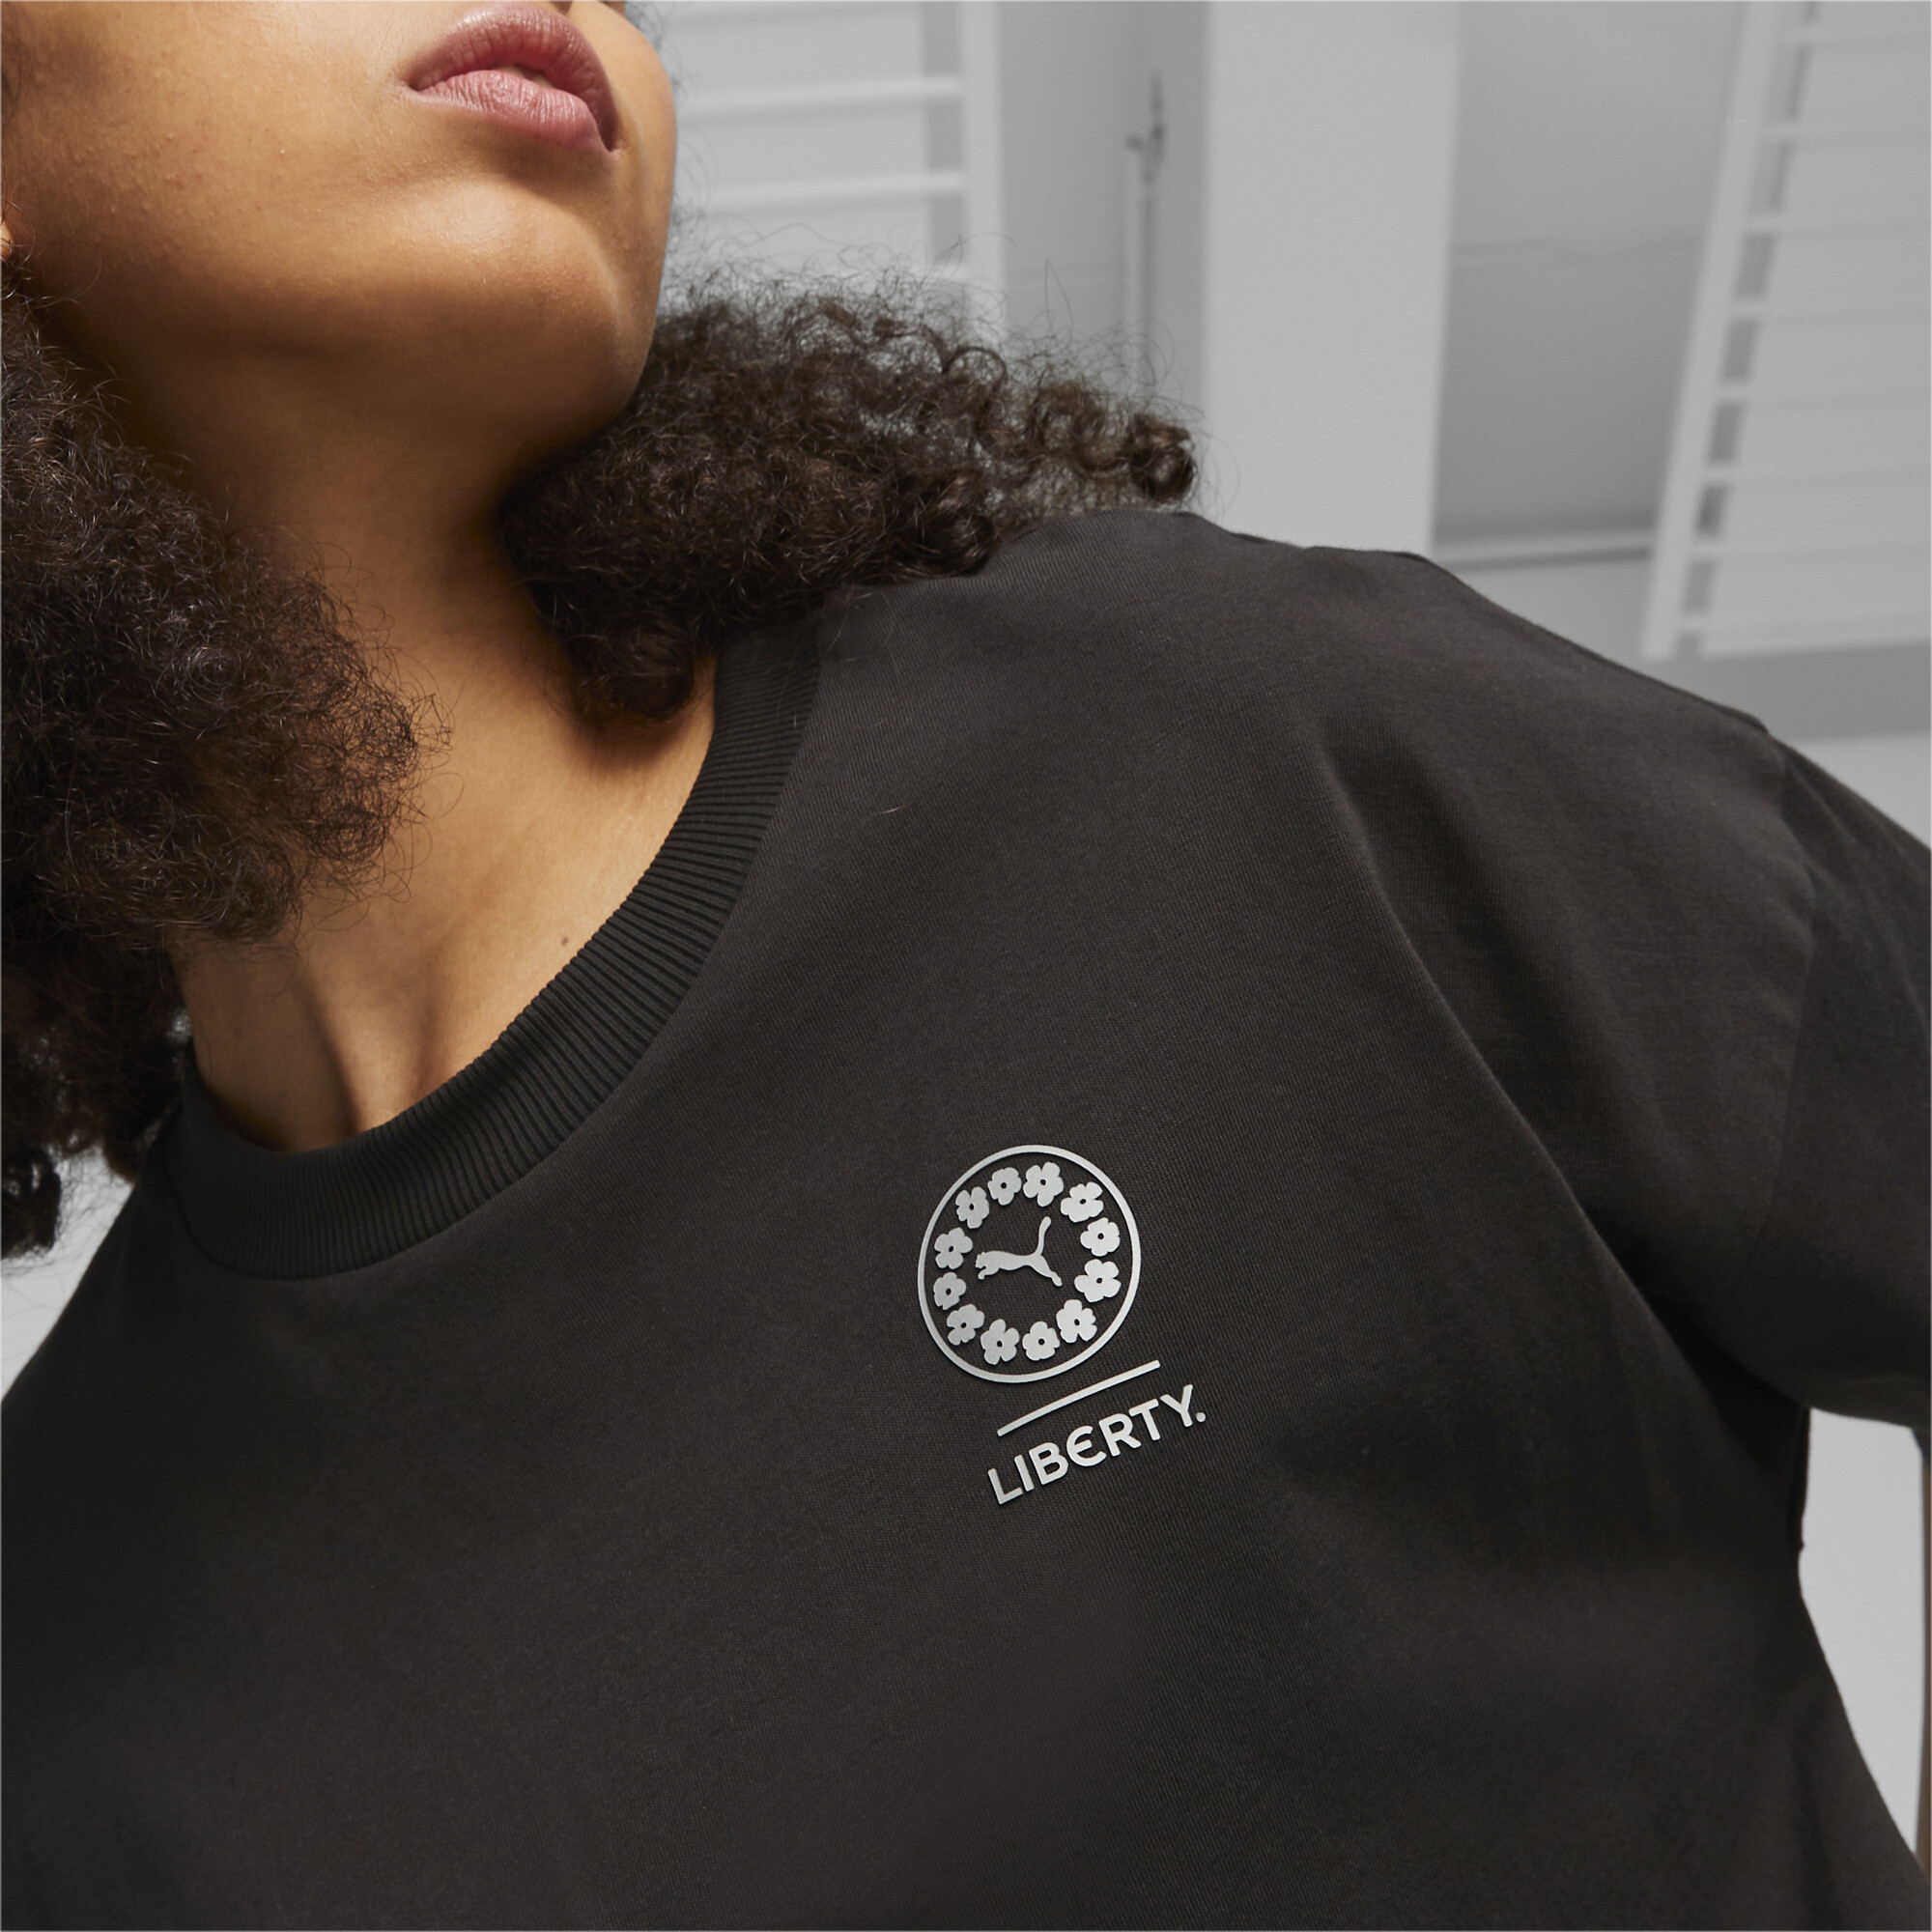 Women's PUMA X LIBERTY Graphic T-Shirt In Black, Size Small